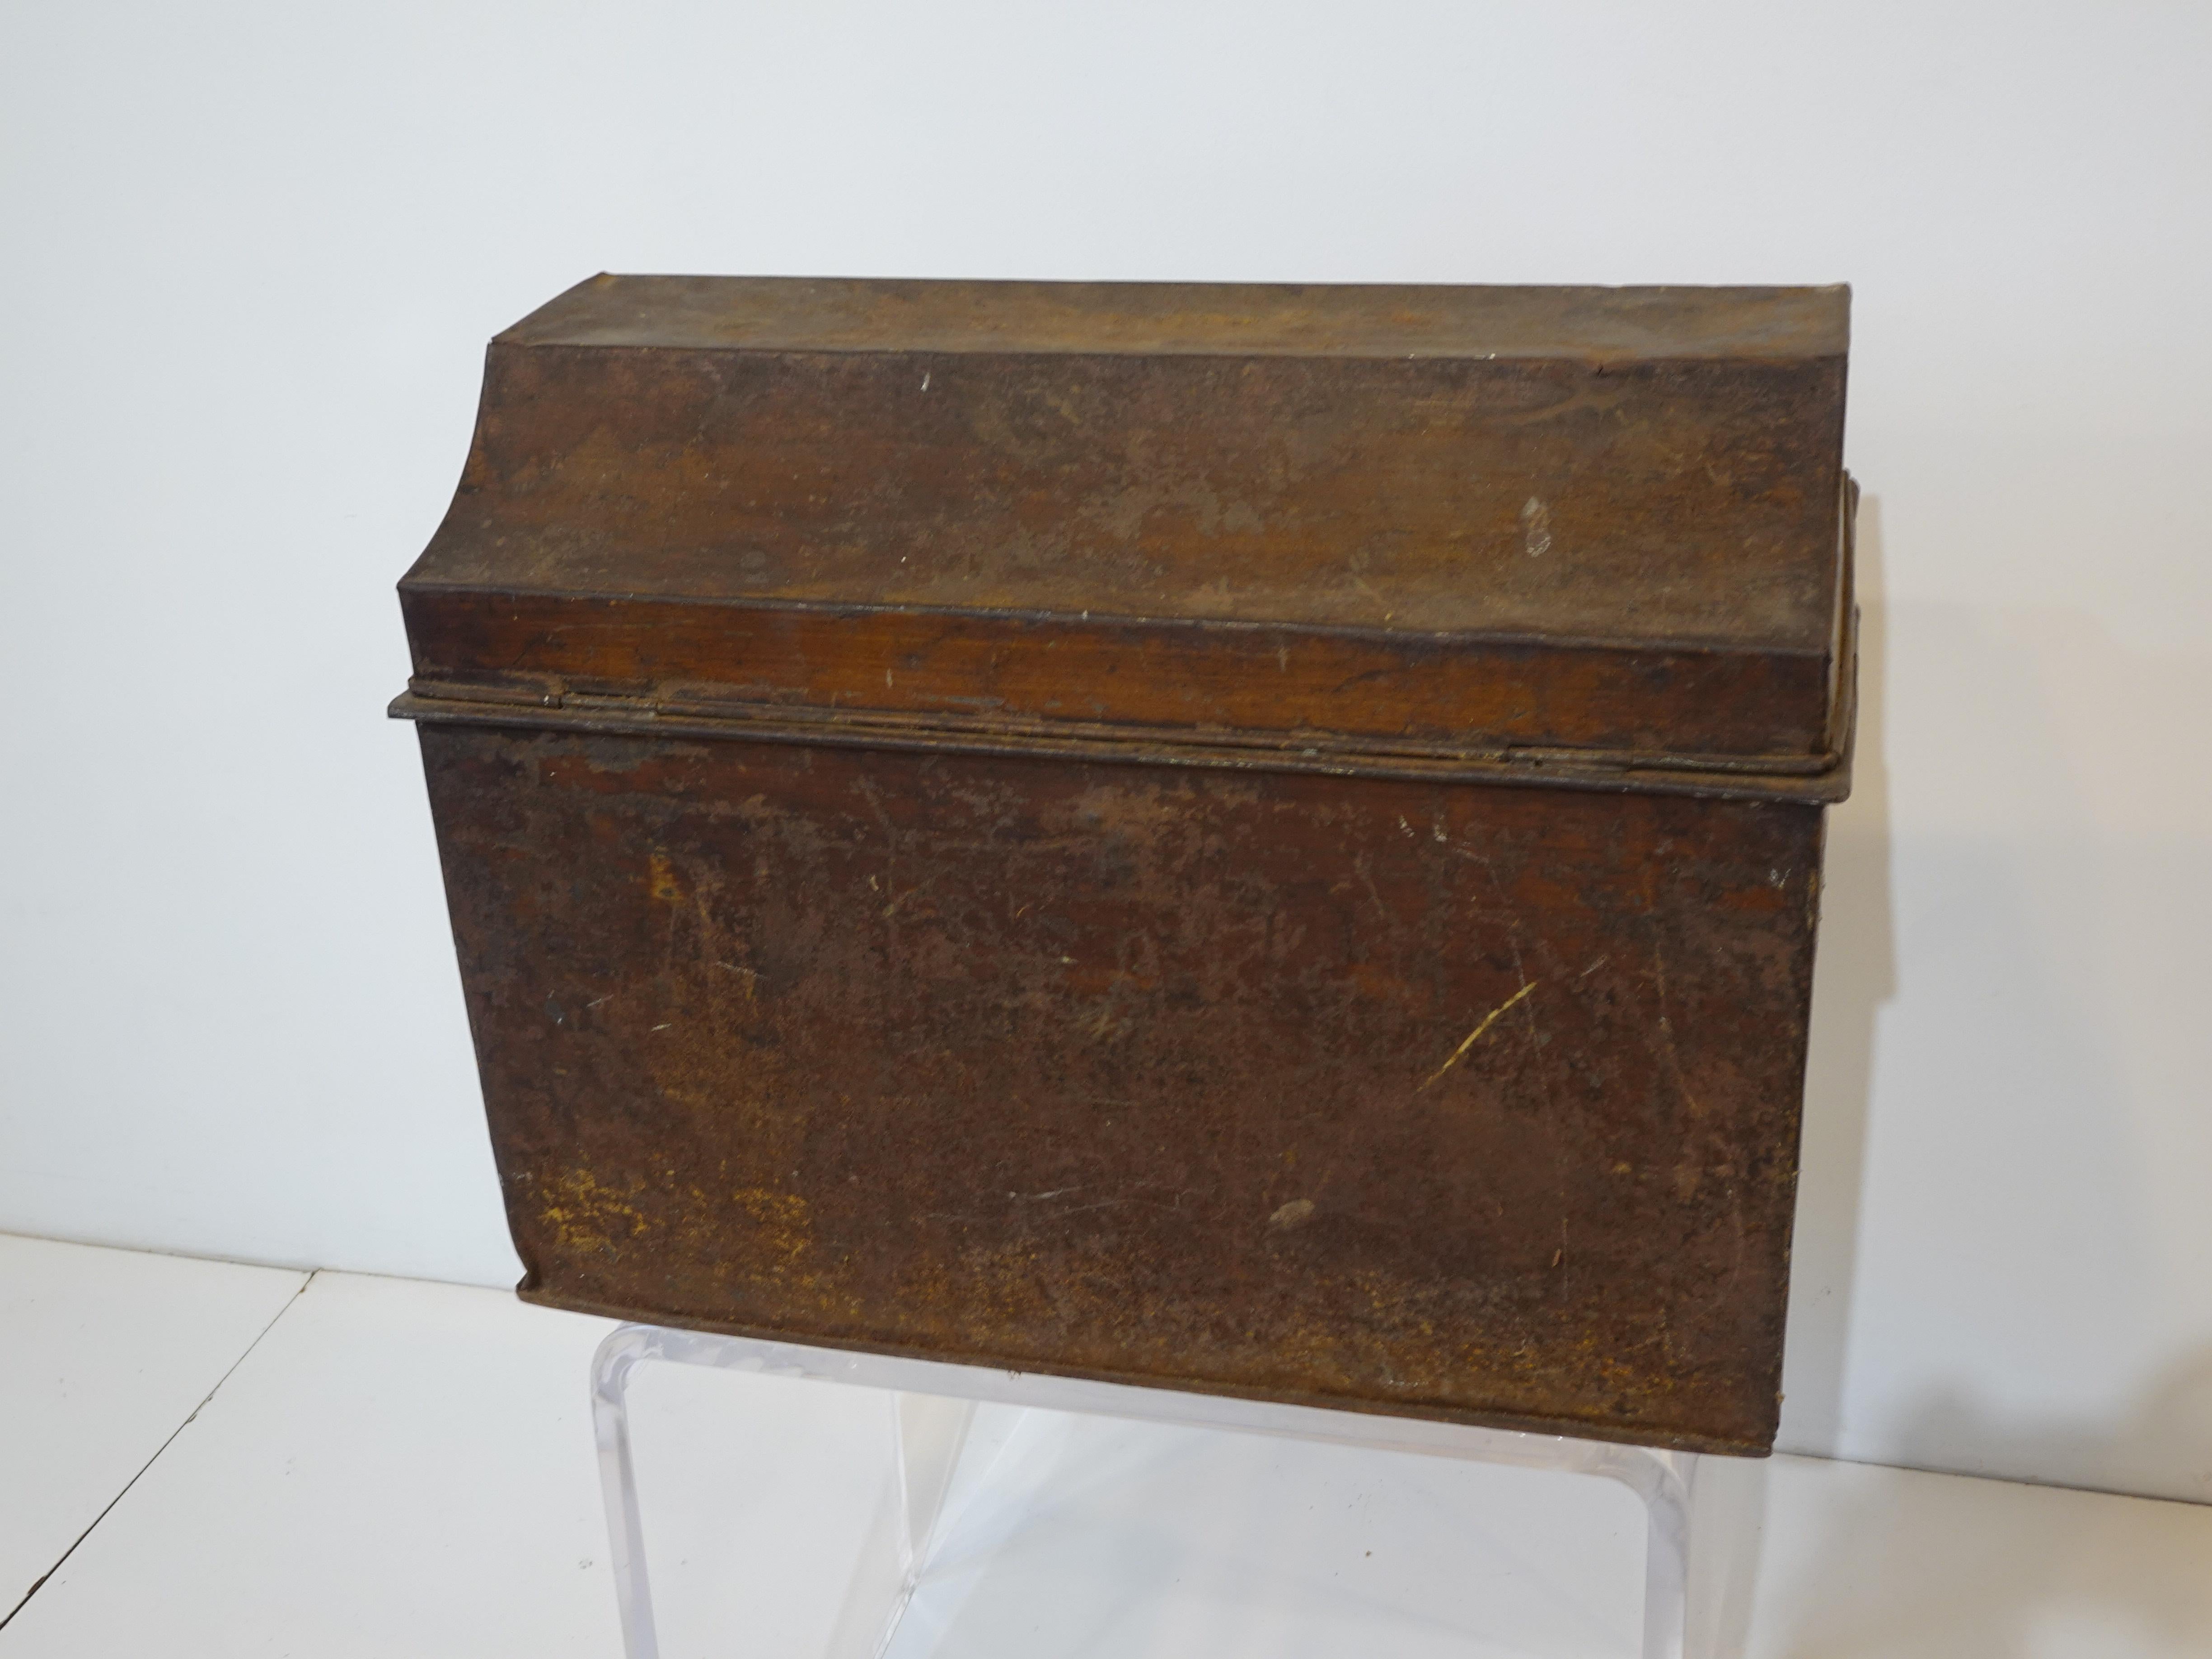 Kirk & Wilson's Royal Mail Box / Trunk   1